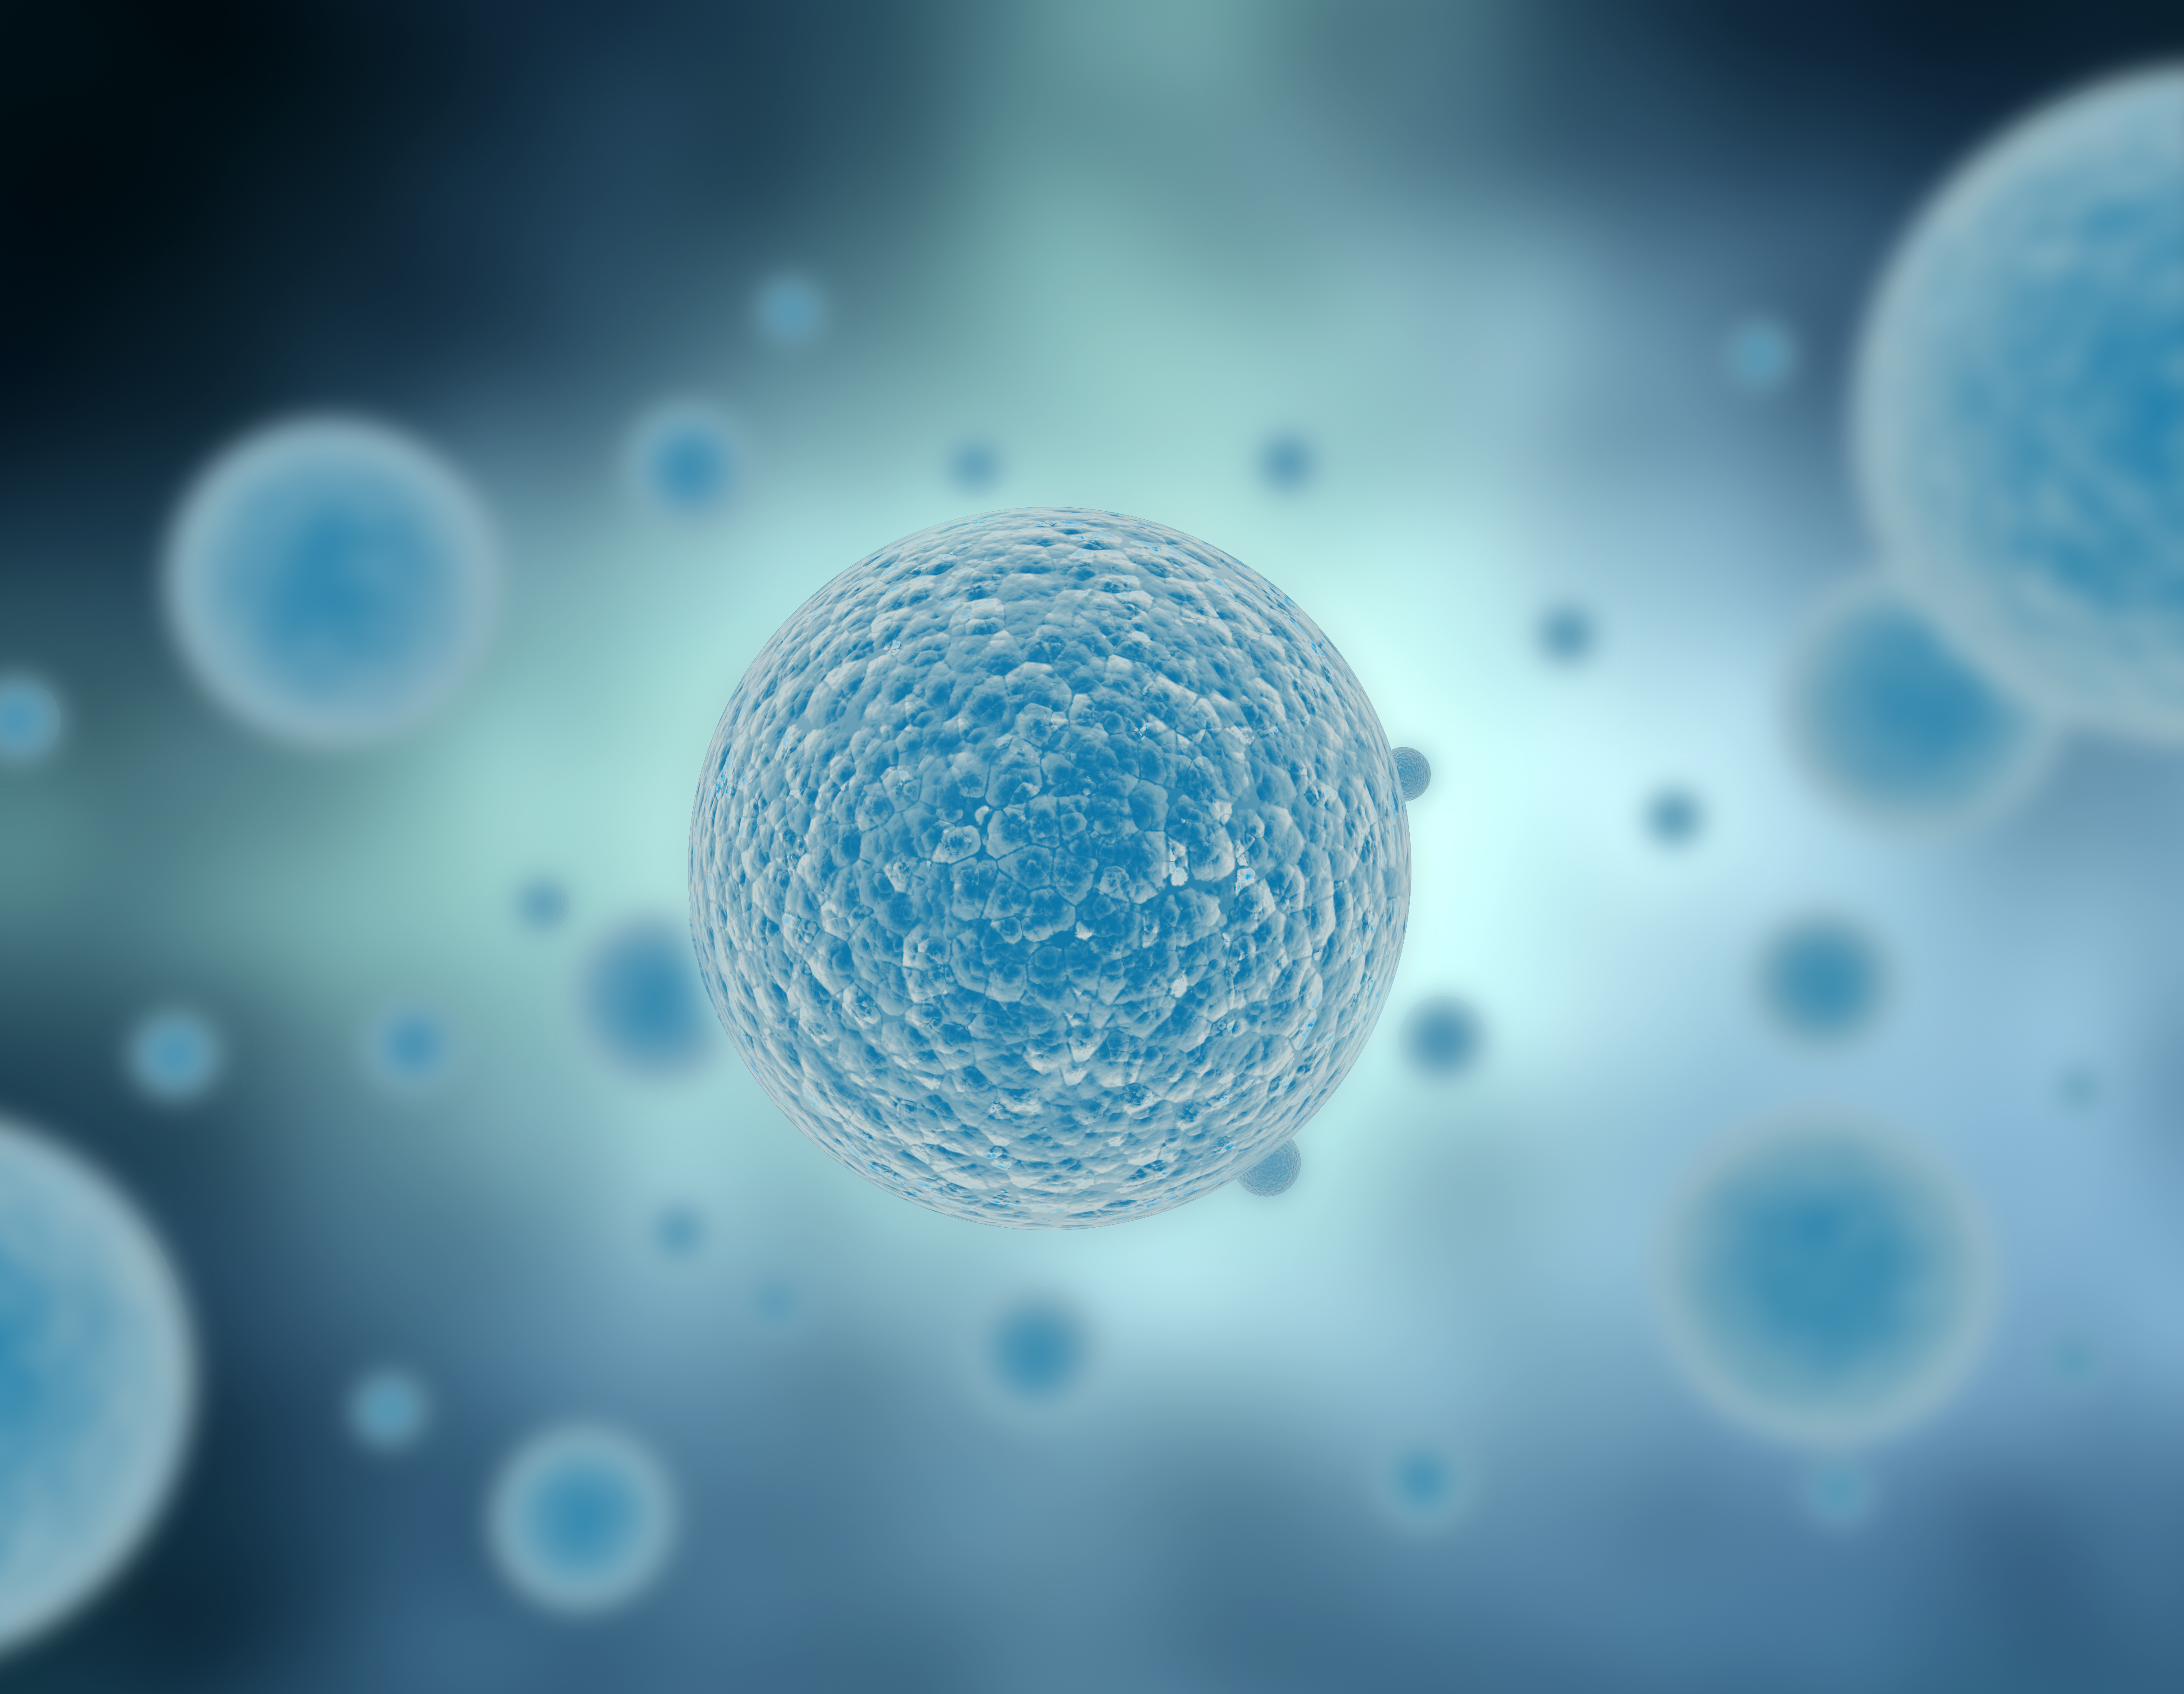 Illustration of cells in blue